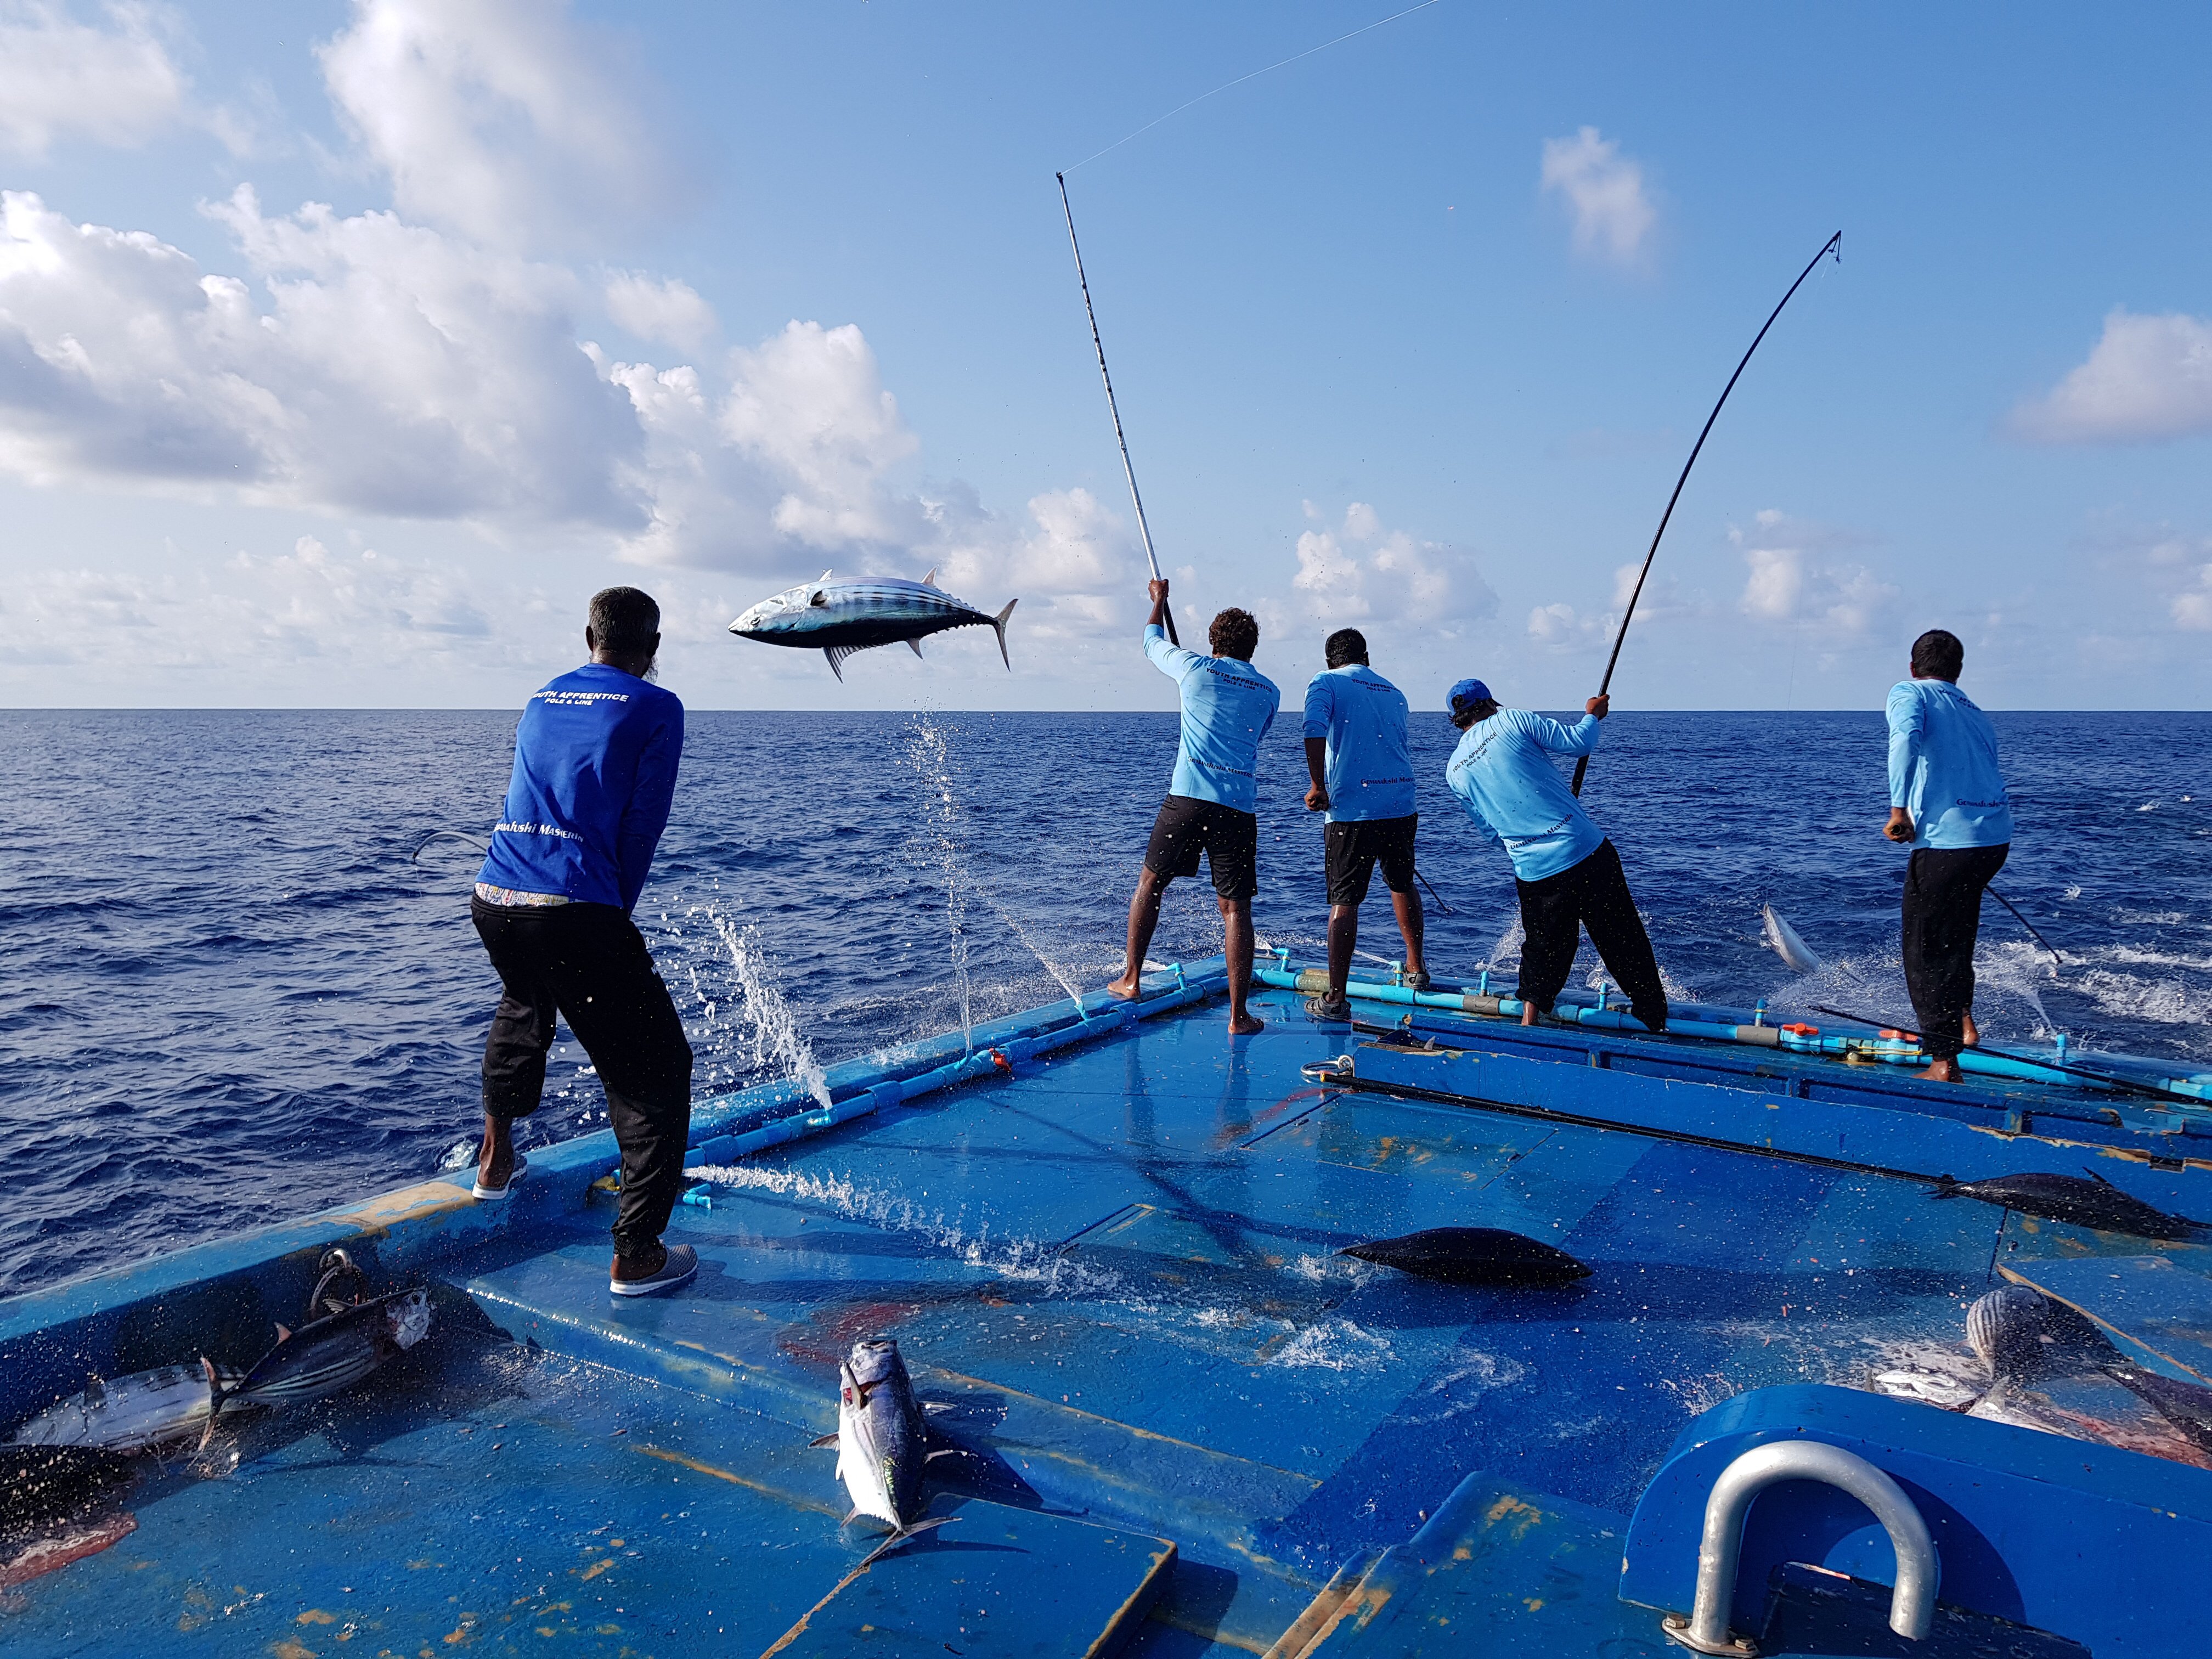 MIFCO on X: Good afternoon.. pole and line fishing; the most sustainable  fishing method!!! #fishing #fish #poleandline #sustainablefishing #nature  #tuna #maldives #wildcatch #MSC #environment #skipjack #tuna #maldivestuna  #indianocean #community https